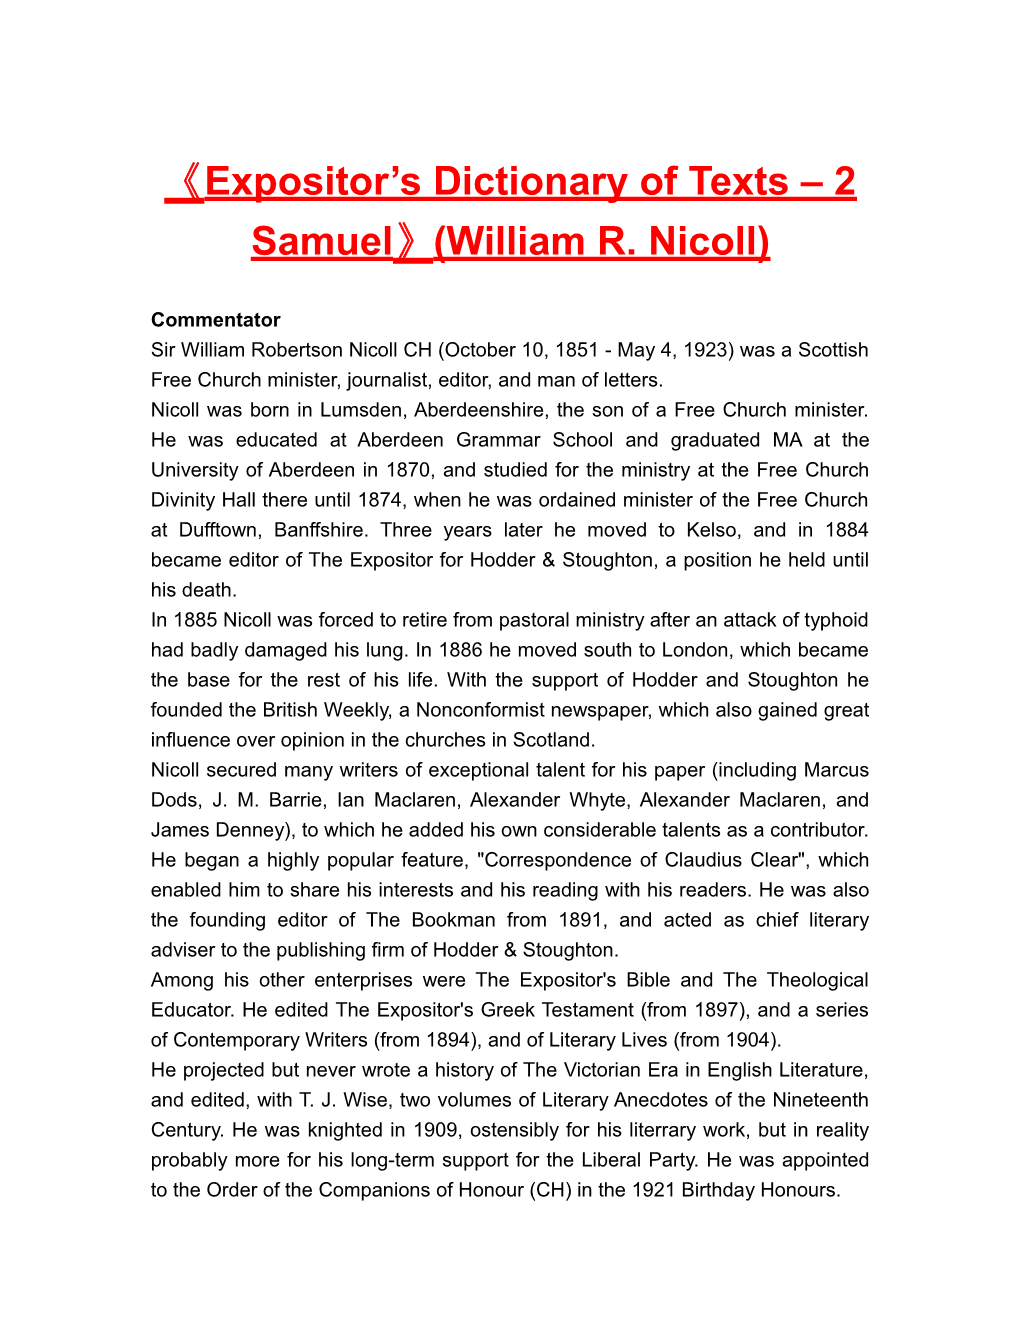 Expositor S Dictionary of Texts 2 Samuel (William R. Nicoll)